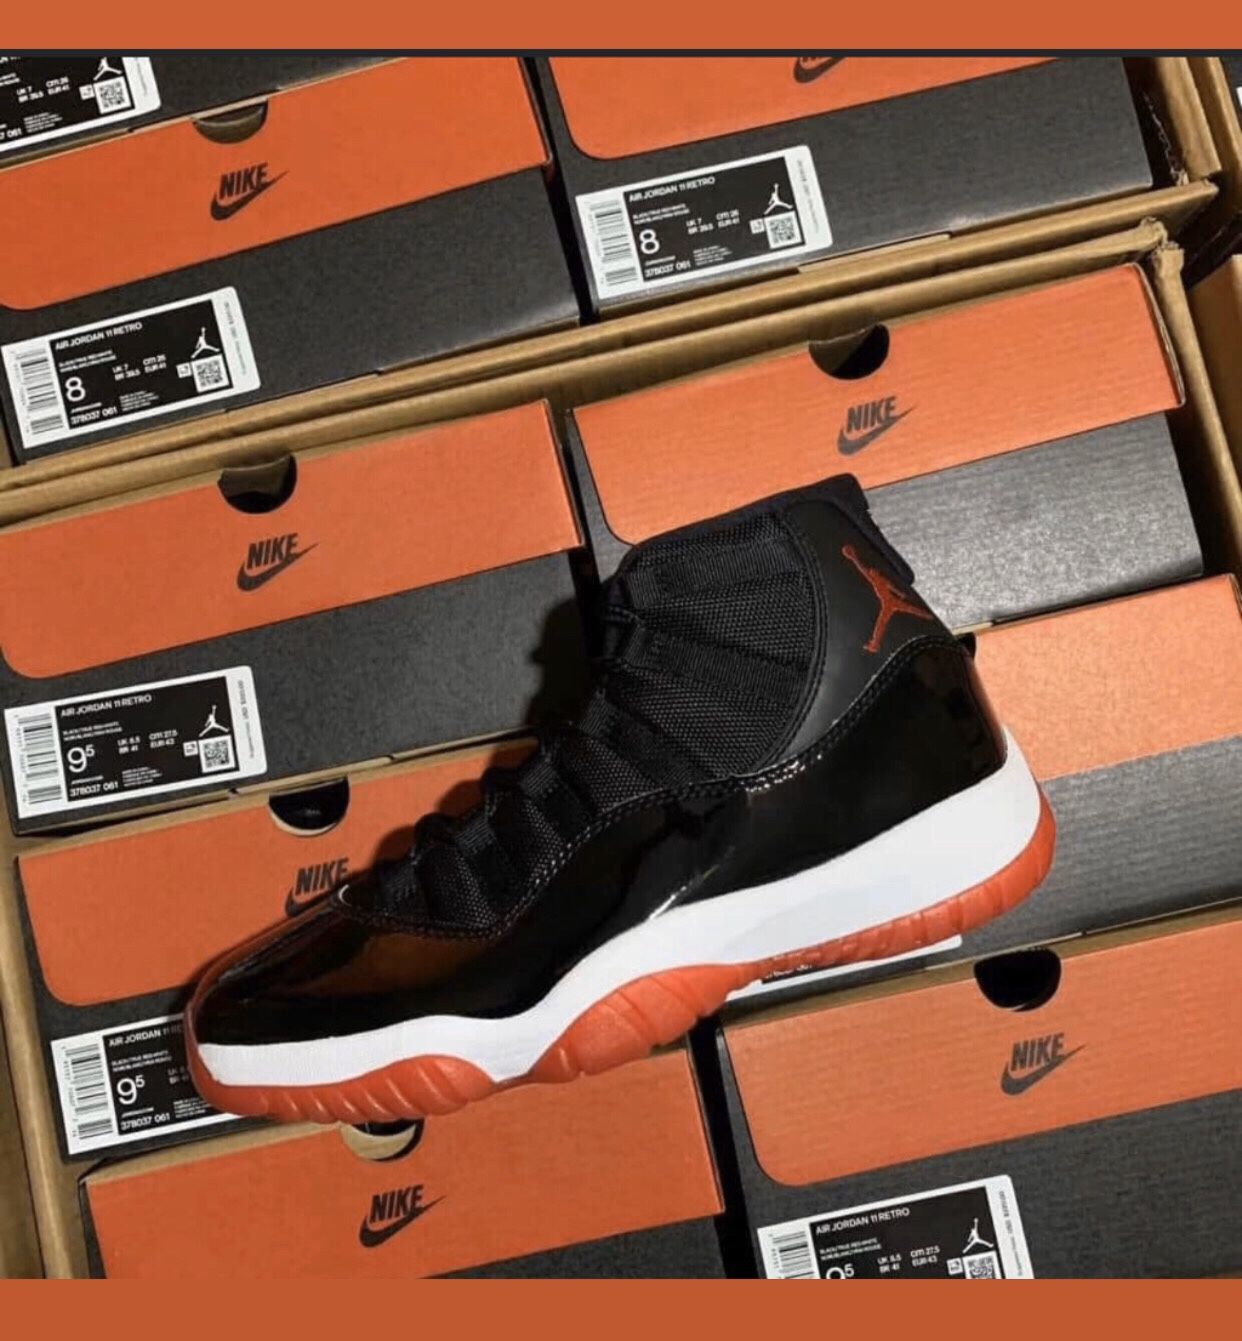 Nike air Jordans retro 11s